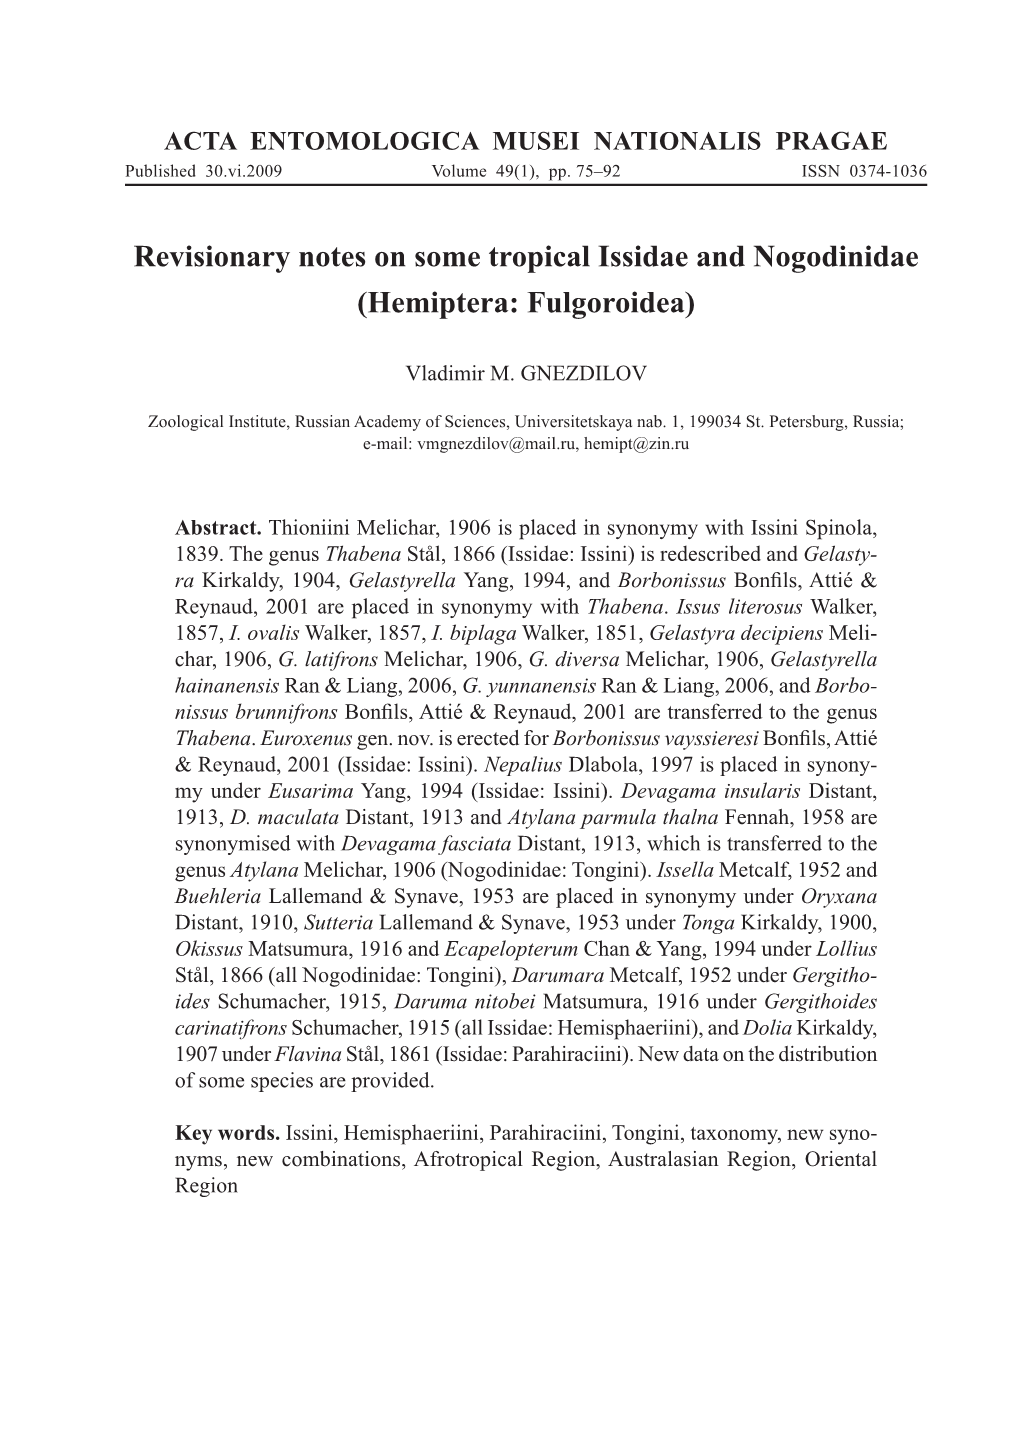 Revisionary Notes on Some Tropical Issidae and Nogodinidae (Hemiptera: Fulgoroidea)